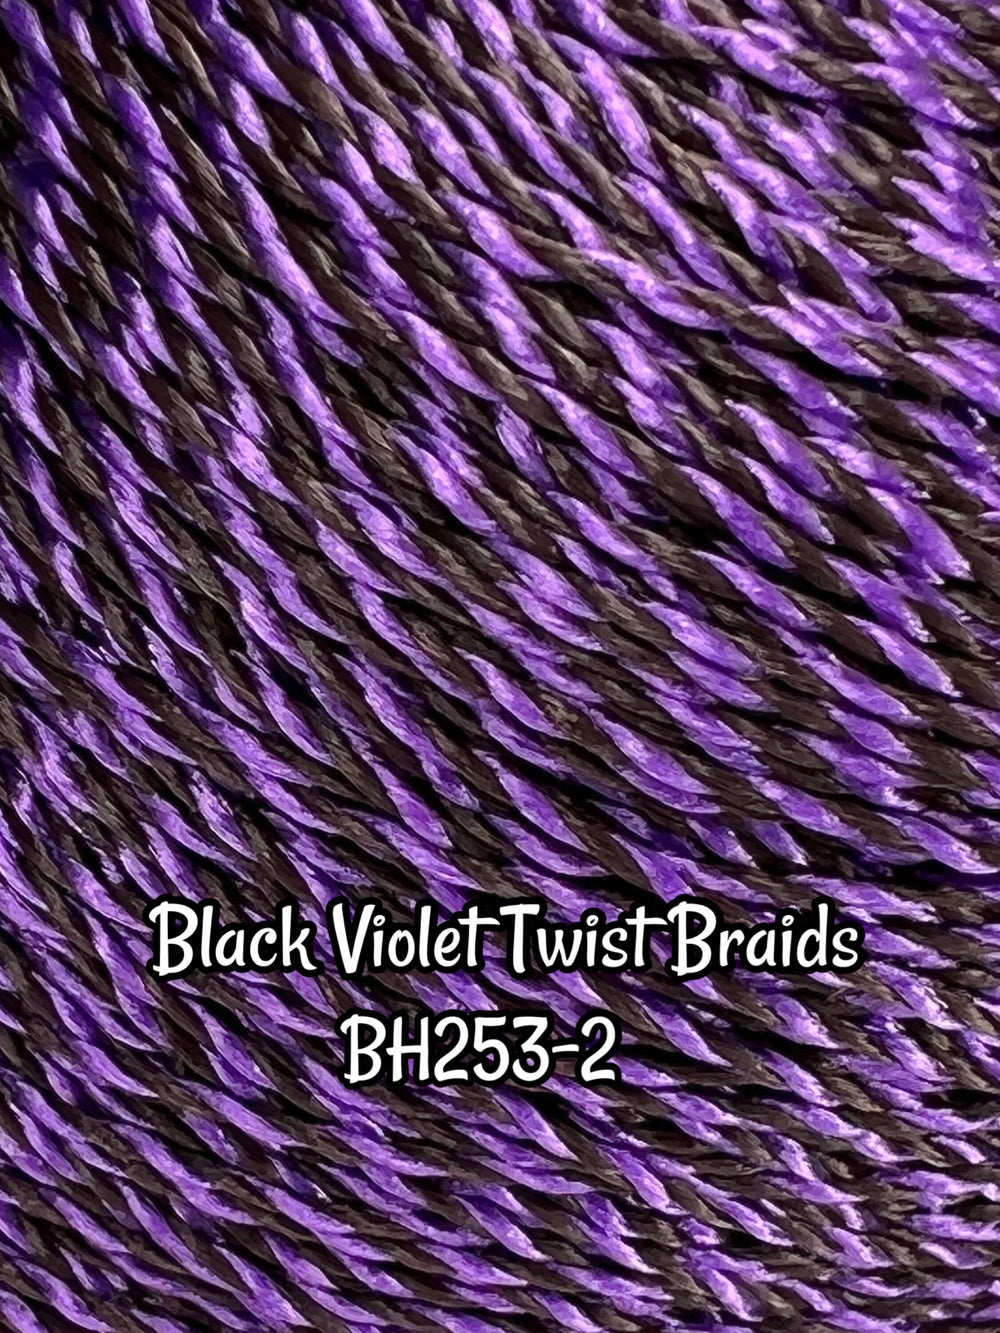 DG-HQ Nylon blend Black Violet Micro Twist Braids BH253-2 36 inch 1oz/28g hank Doll Hair for rerooting fashion dolls Standard Temperature